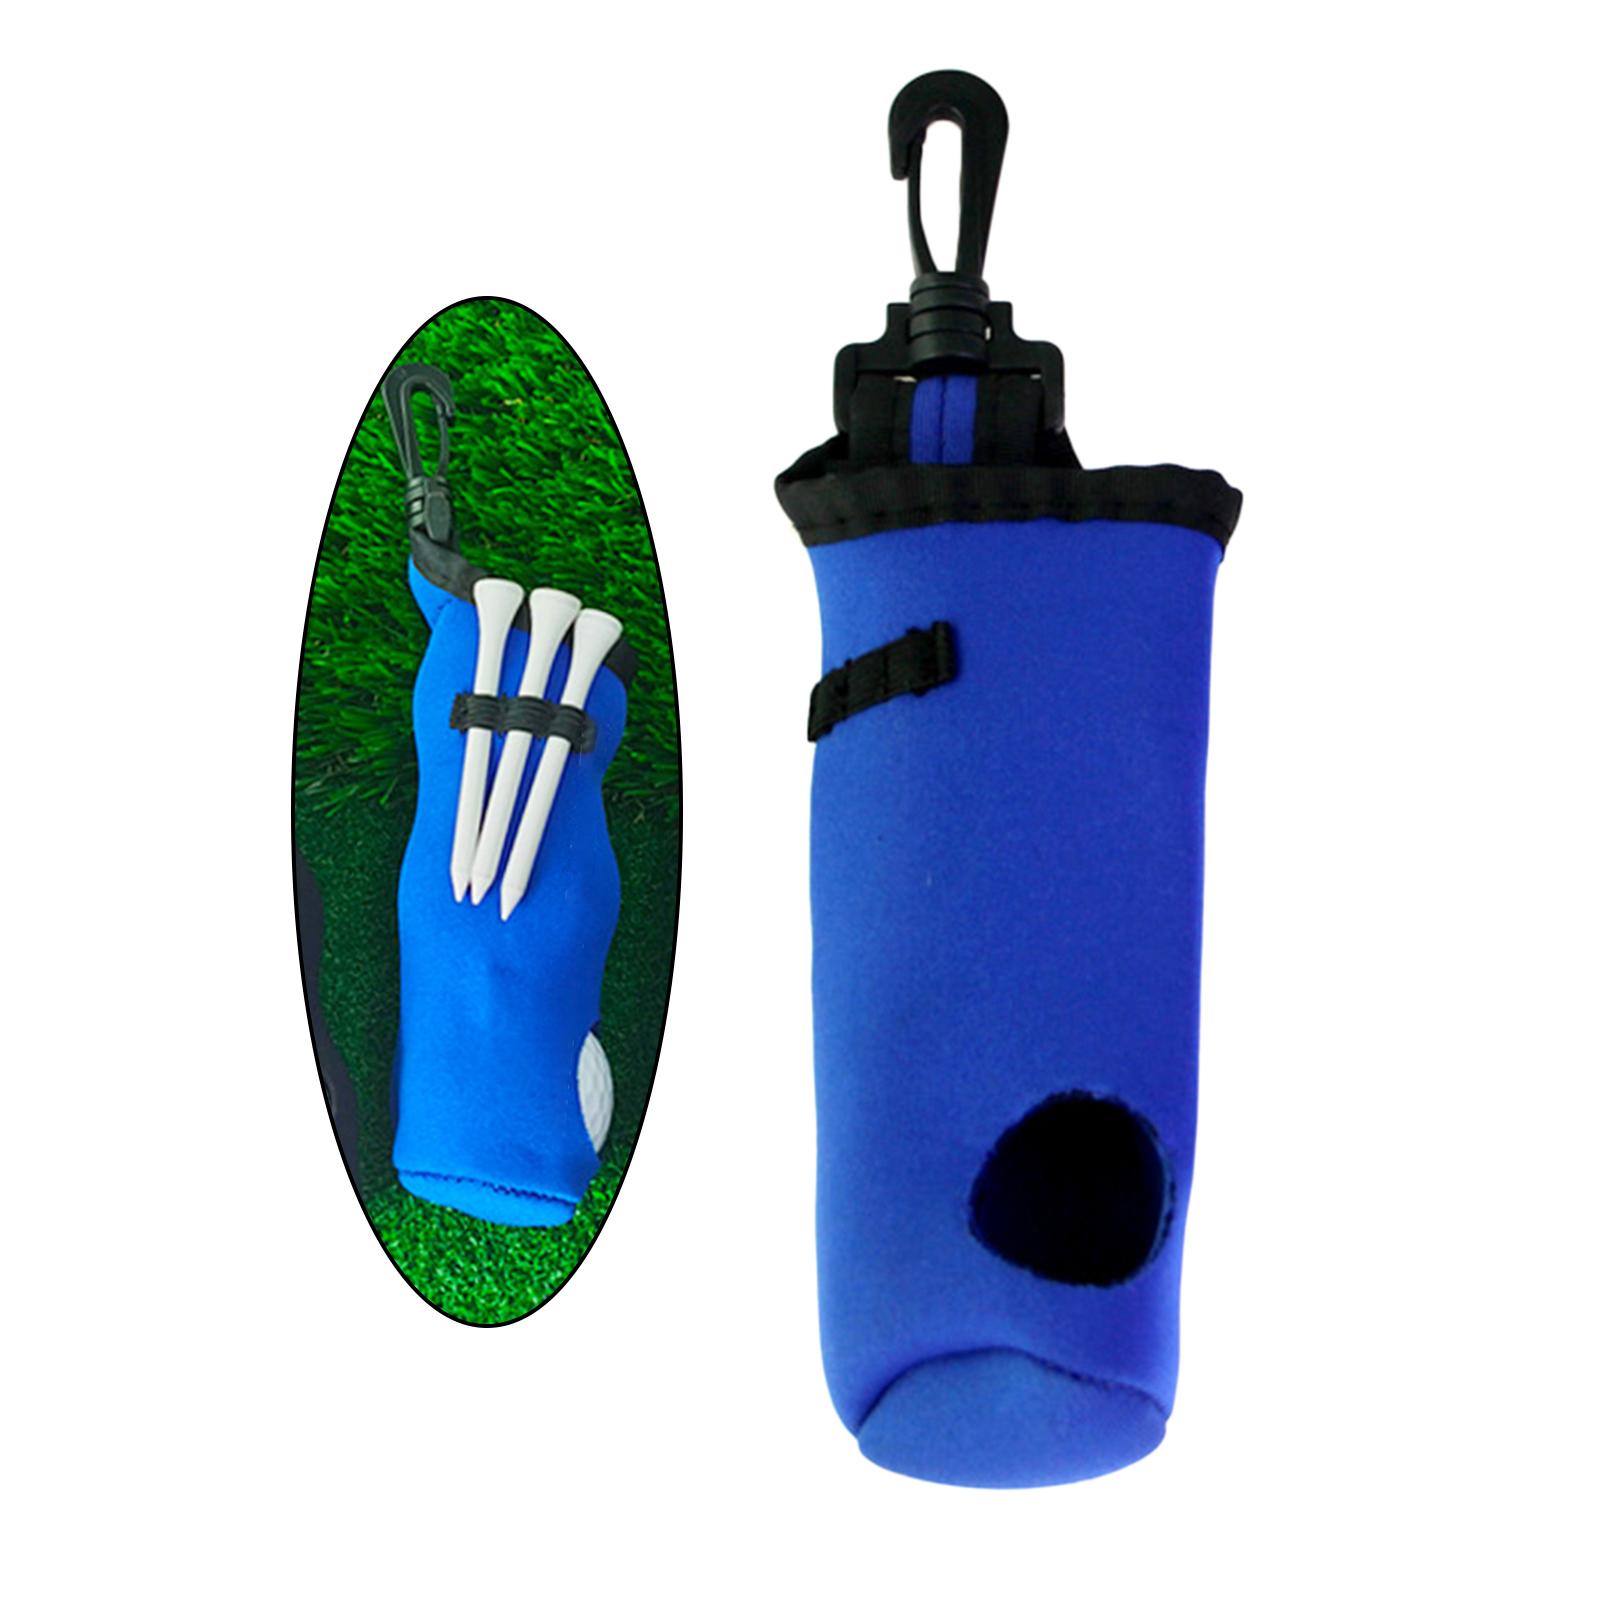 Golf Ball Carry Bag with Hook for 3 Golf Ball 3 Tees Waist Pouch Blue Bag